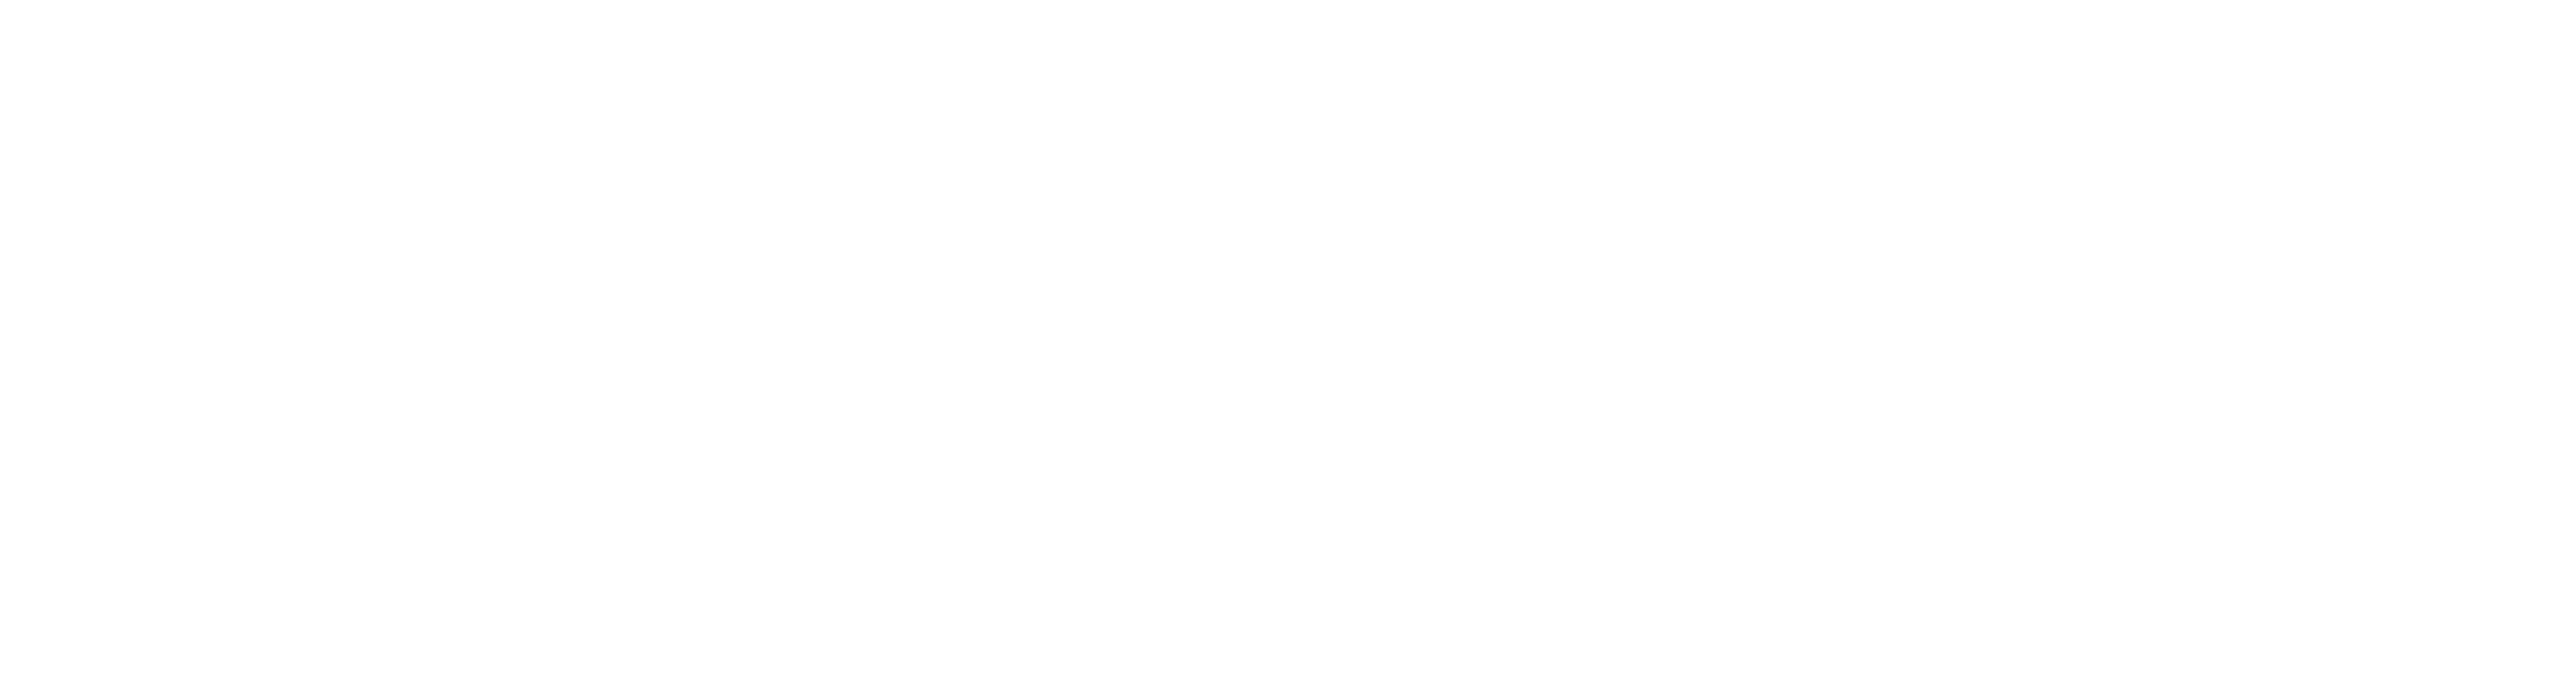 Biomea-Fusion_Logo_White_rev1